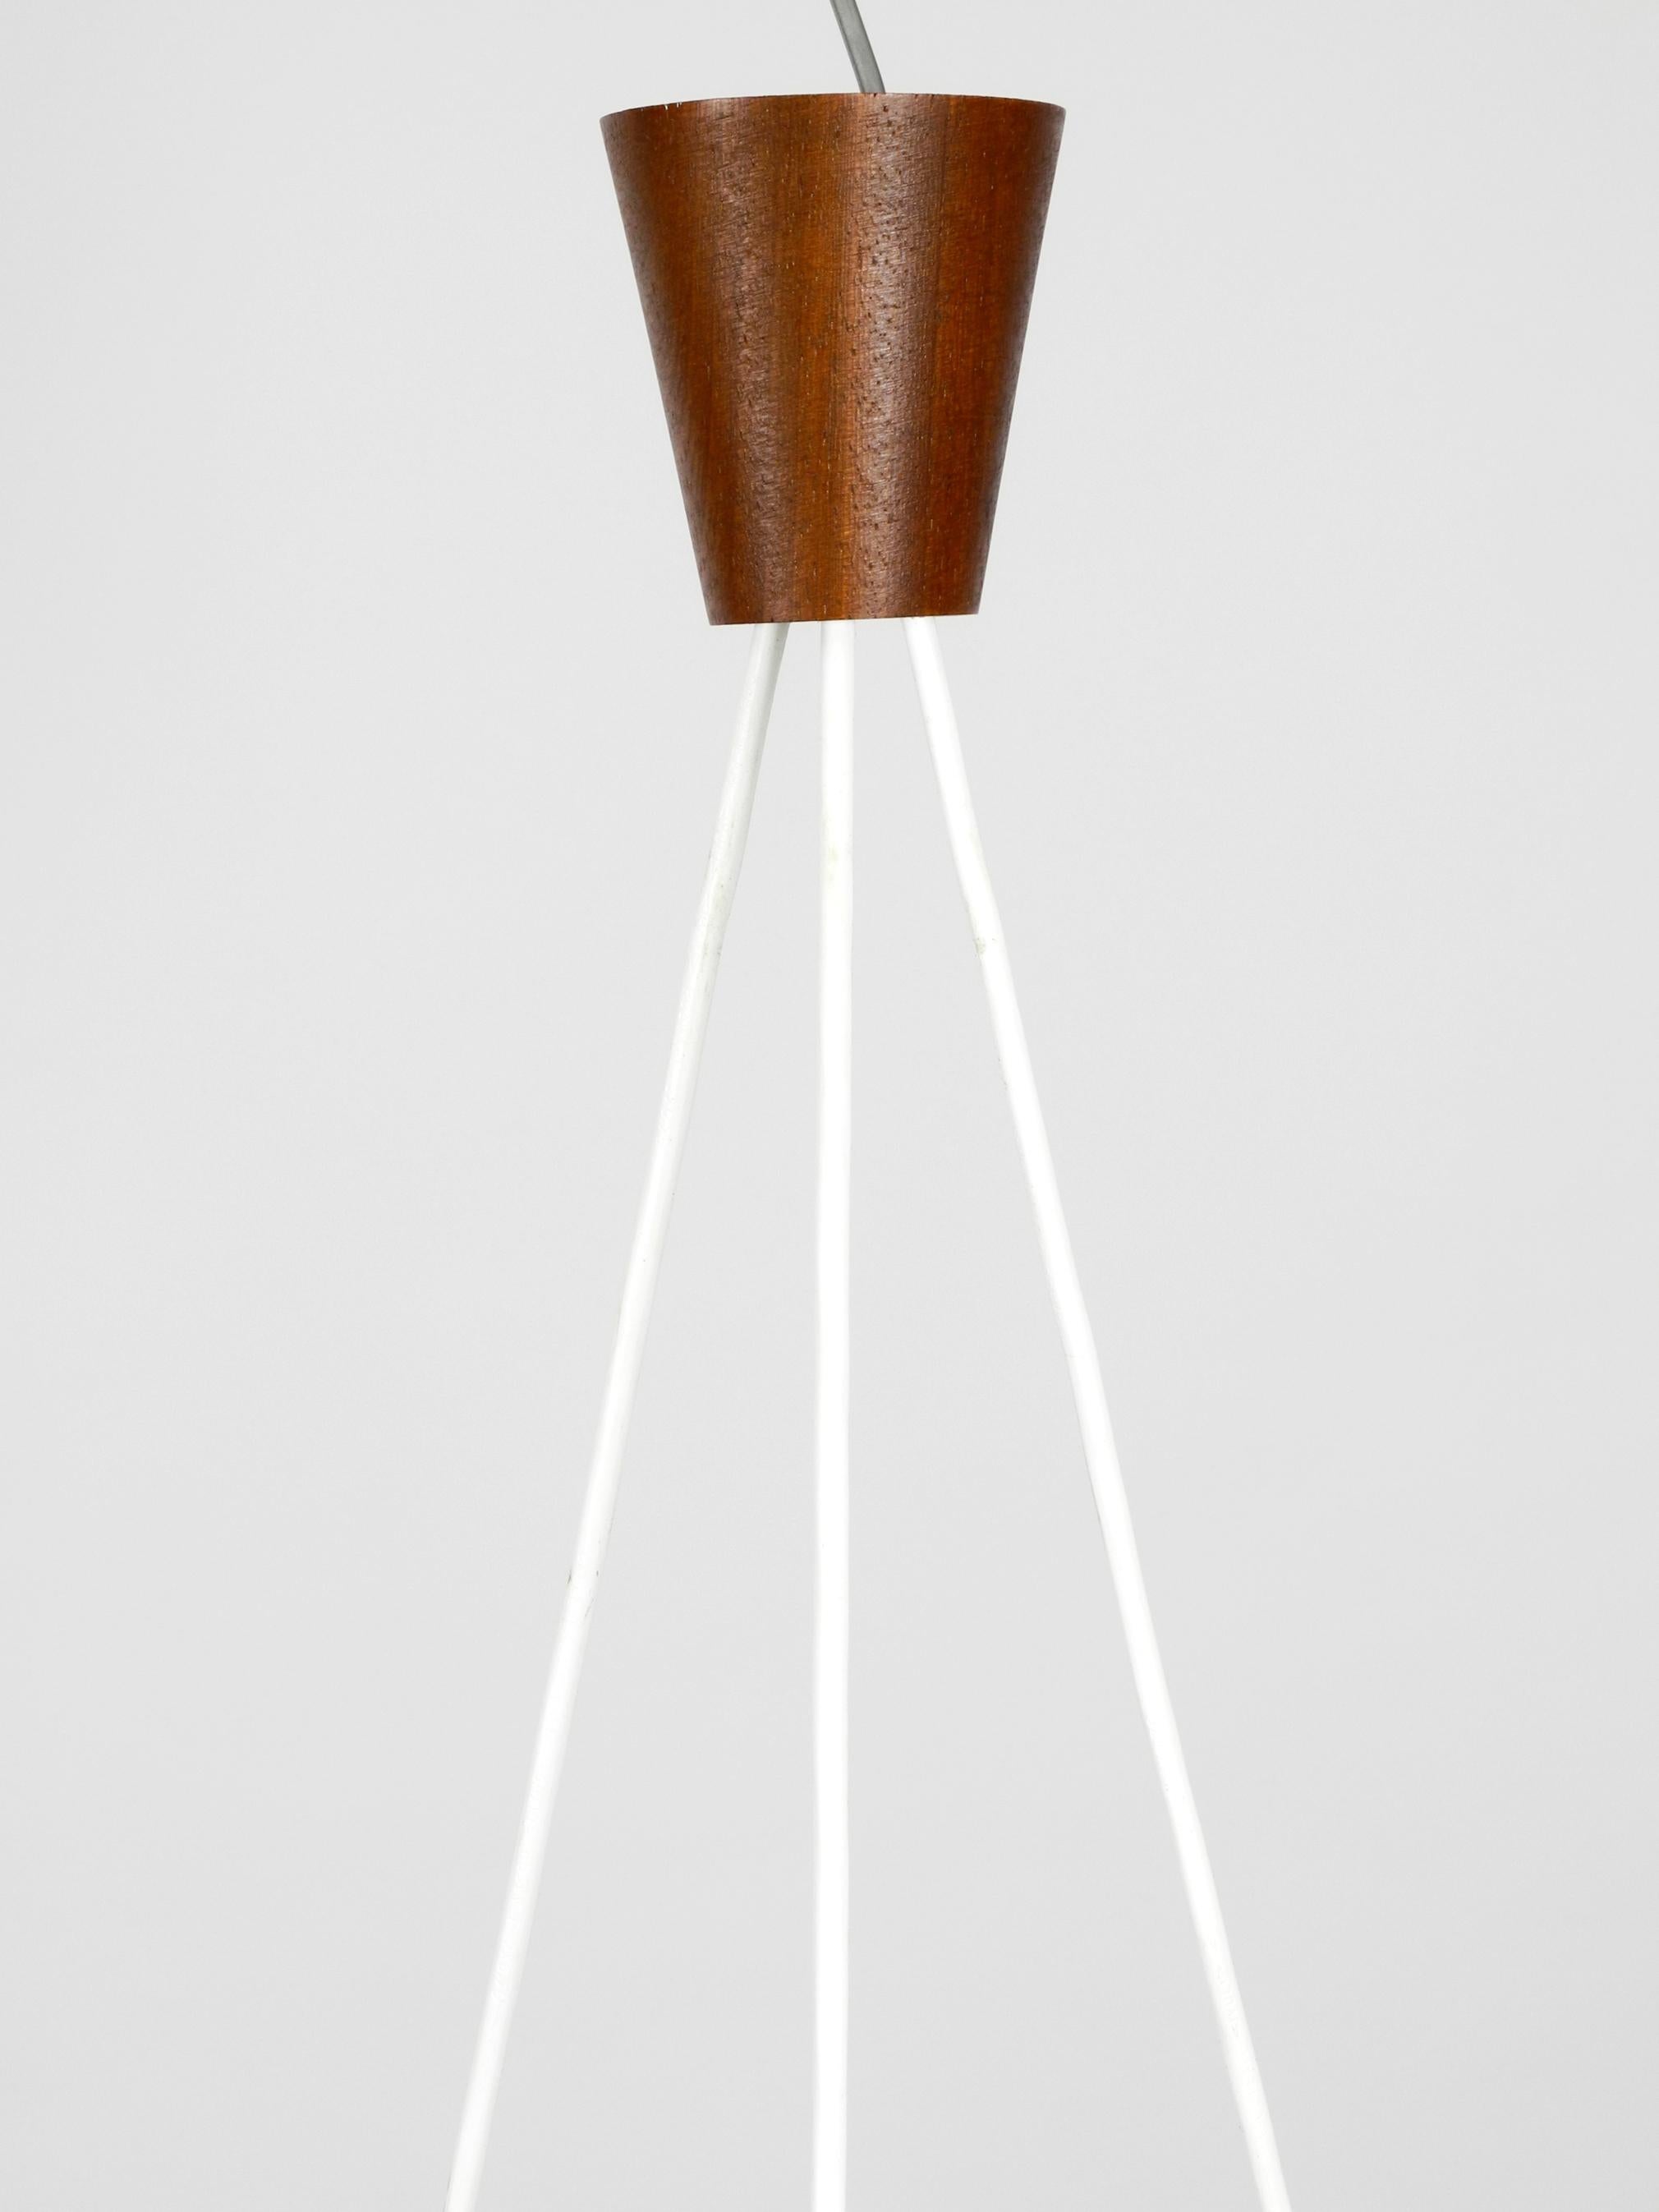 Original Midcentury 3-Arm Pendant Lamp Made of Teak and Opal Glass 1